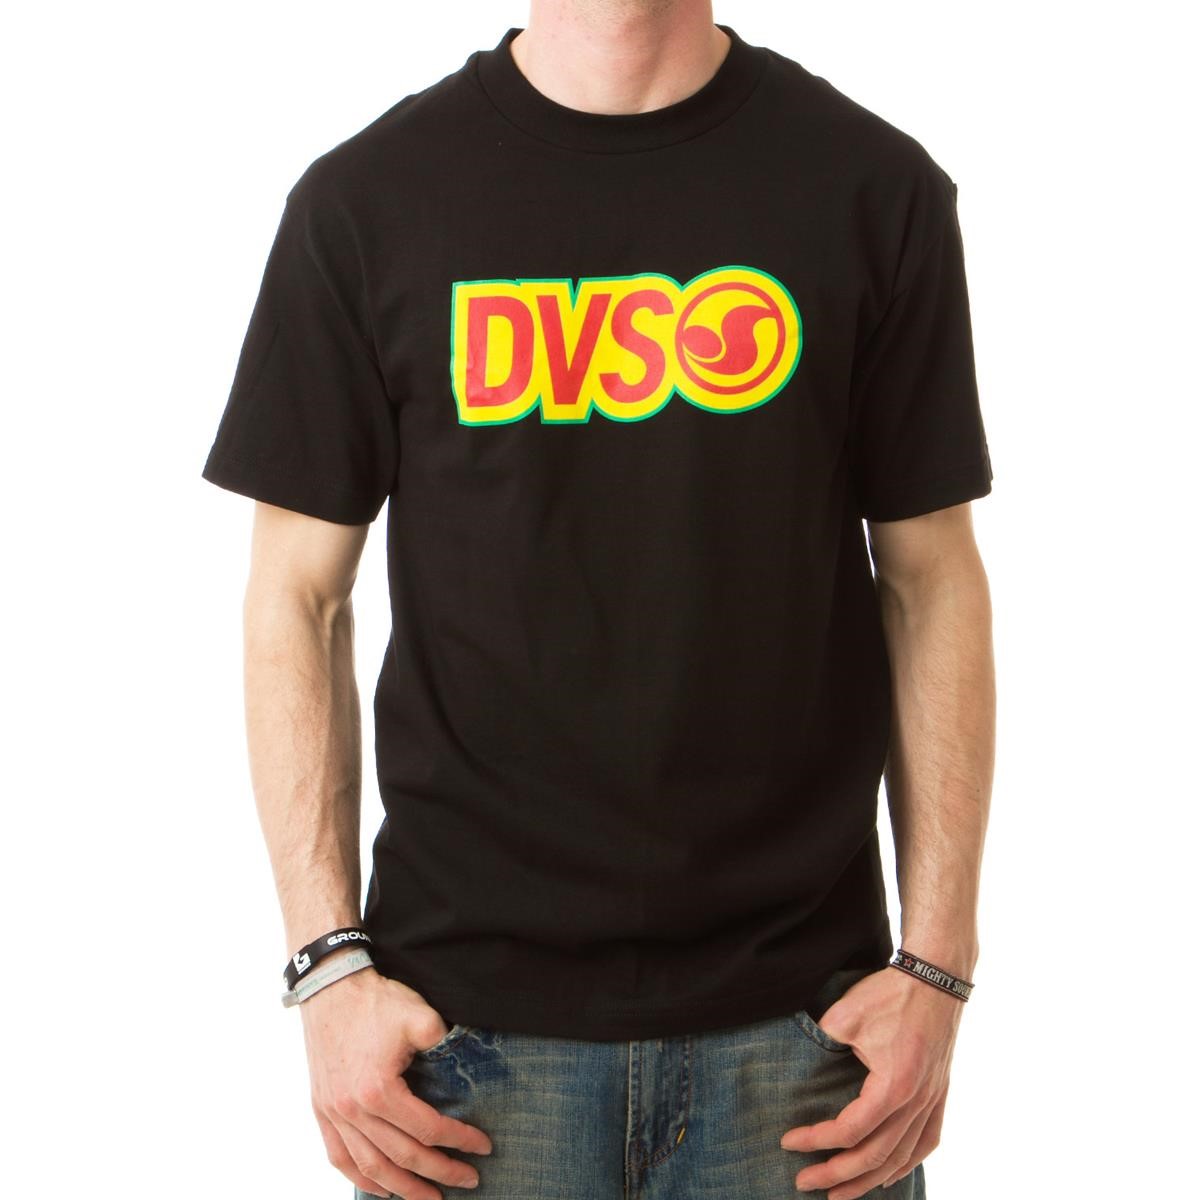 Freizeit/Streetwear Bekleidung-T-Shirts/Polos - DVS T-Shirt Core 2 MB Black